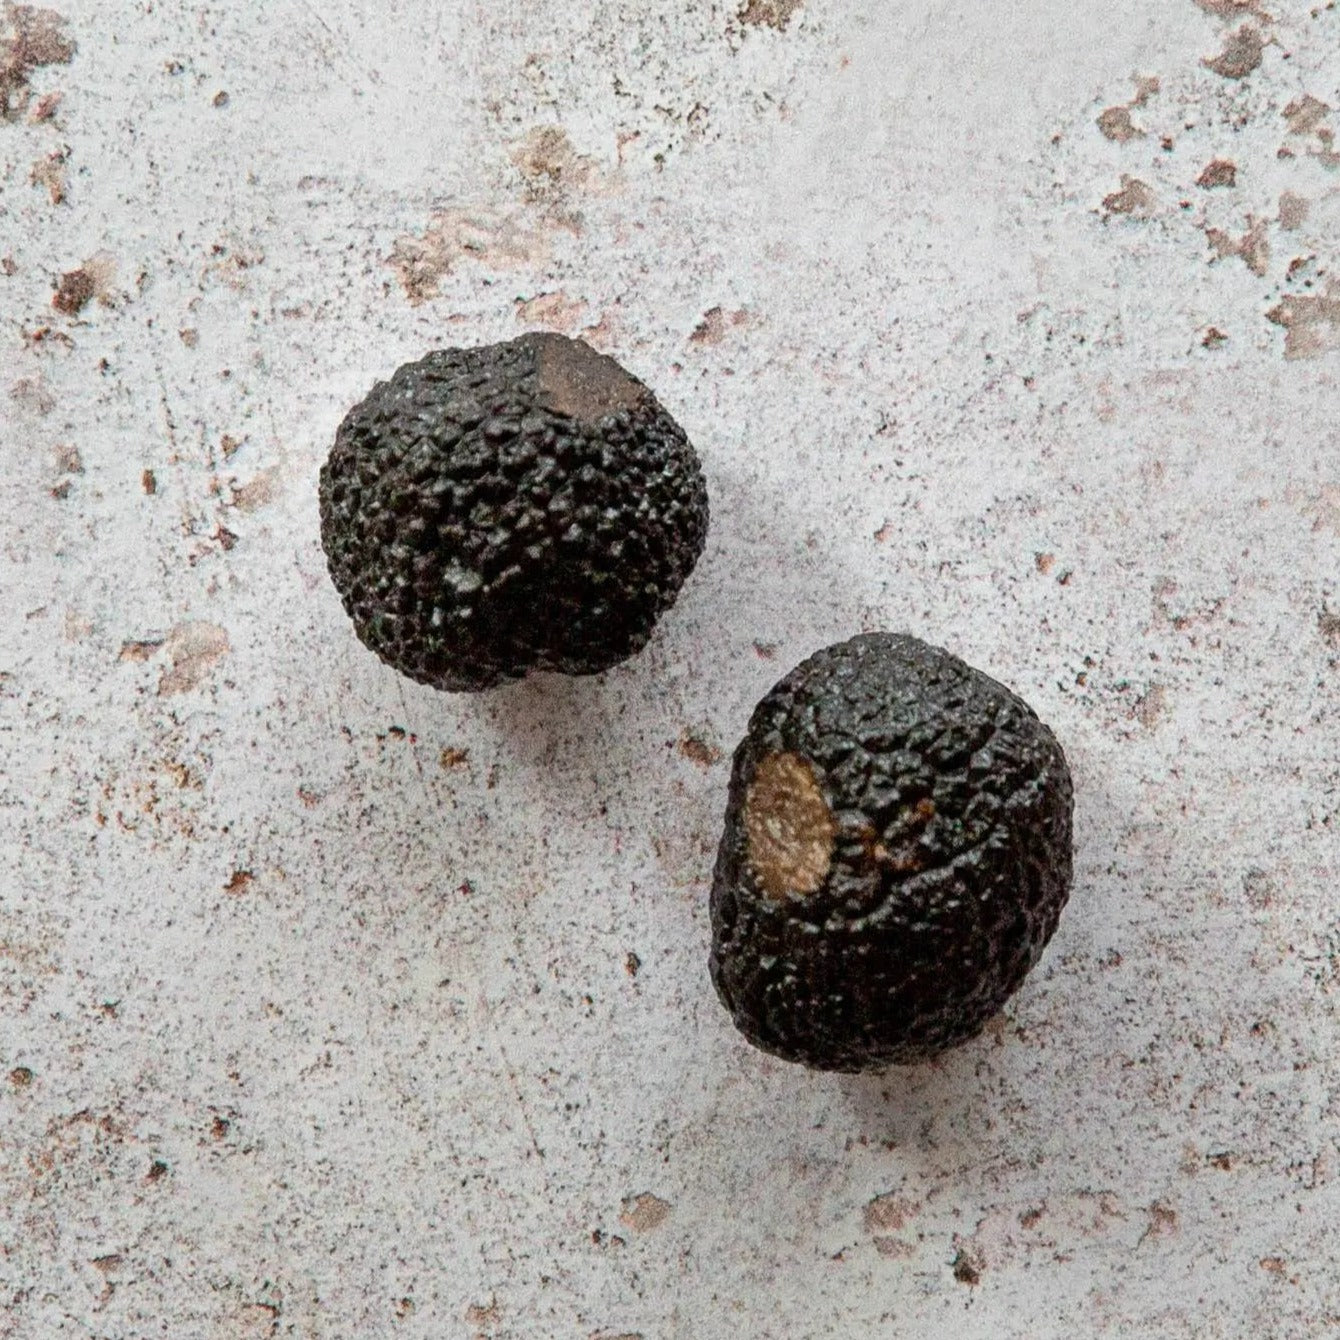 plantin preserved black truffles | FINE & WILD UK